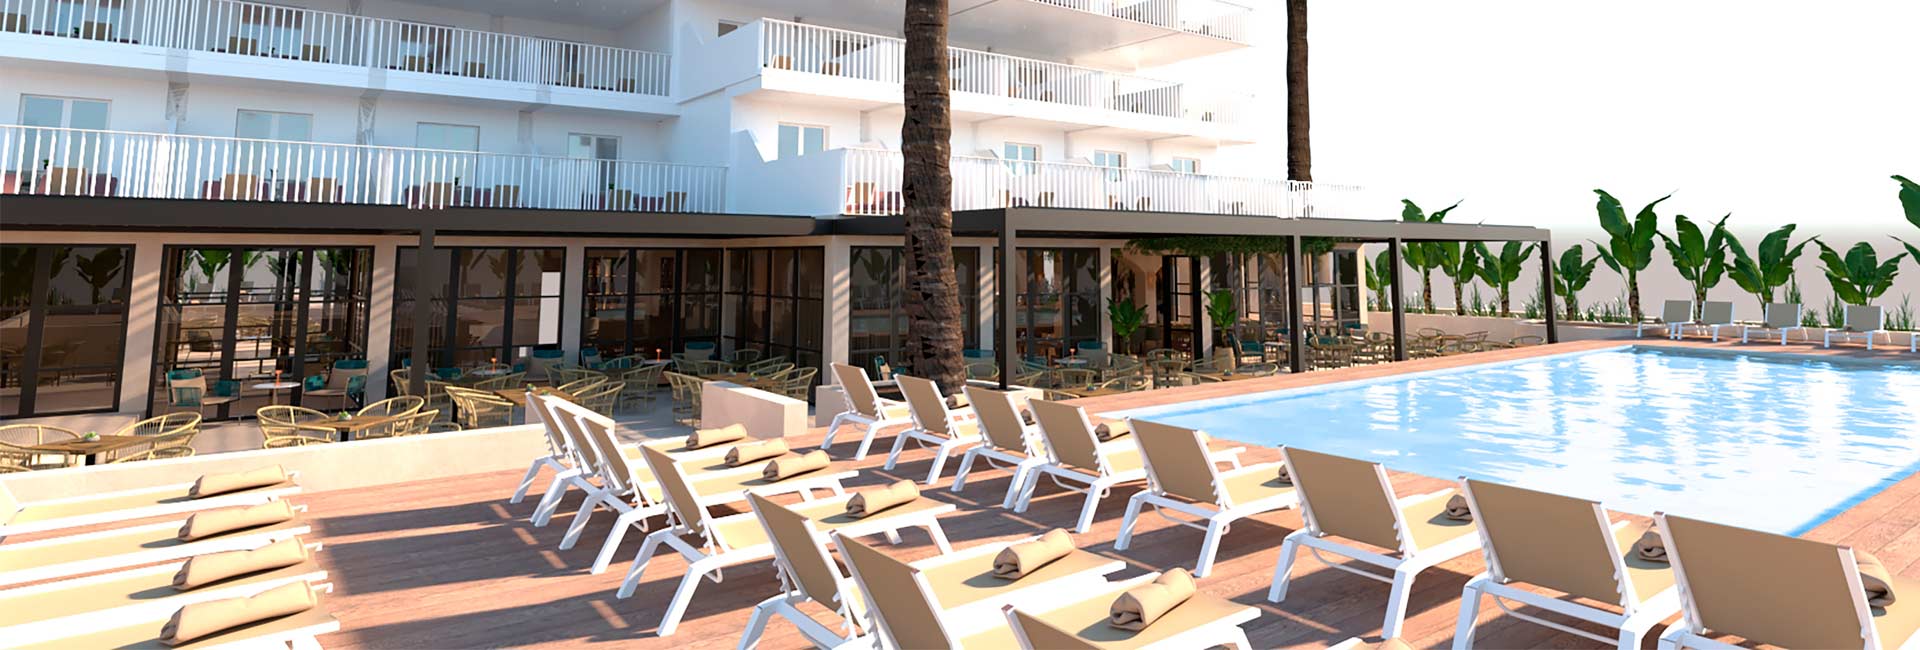 Tormento Enviar Tradicion Universal Hotel Bikini · Cala Millor, Mallorca